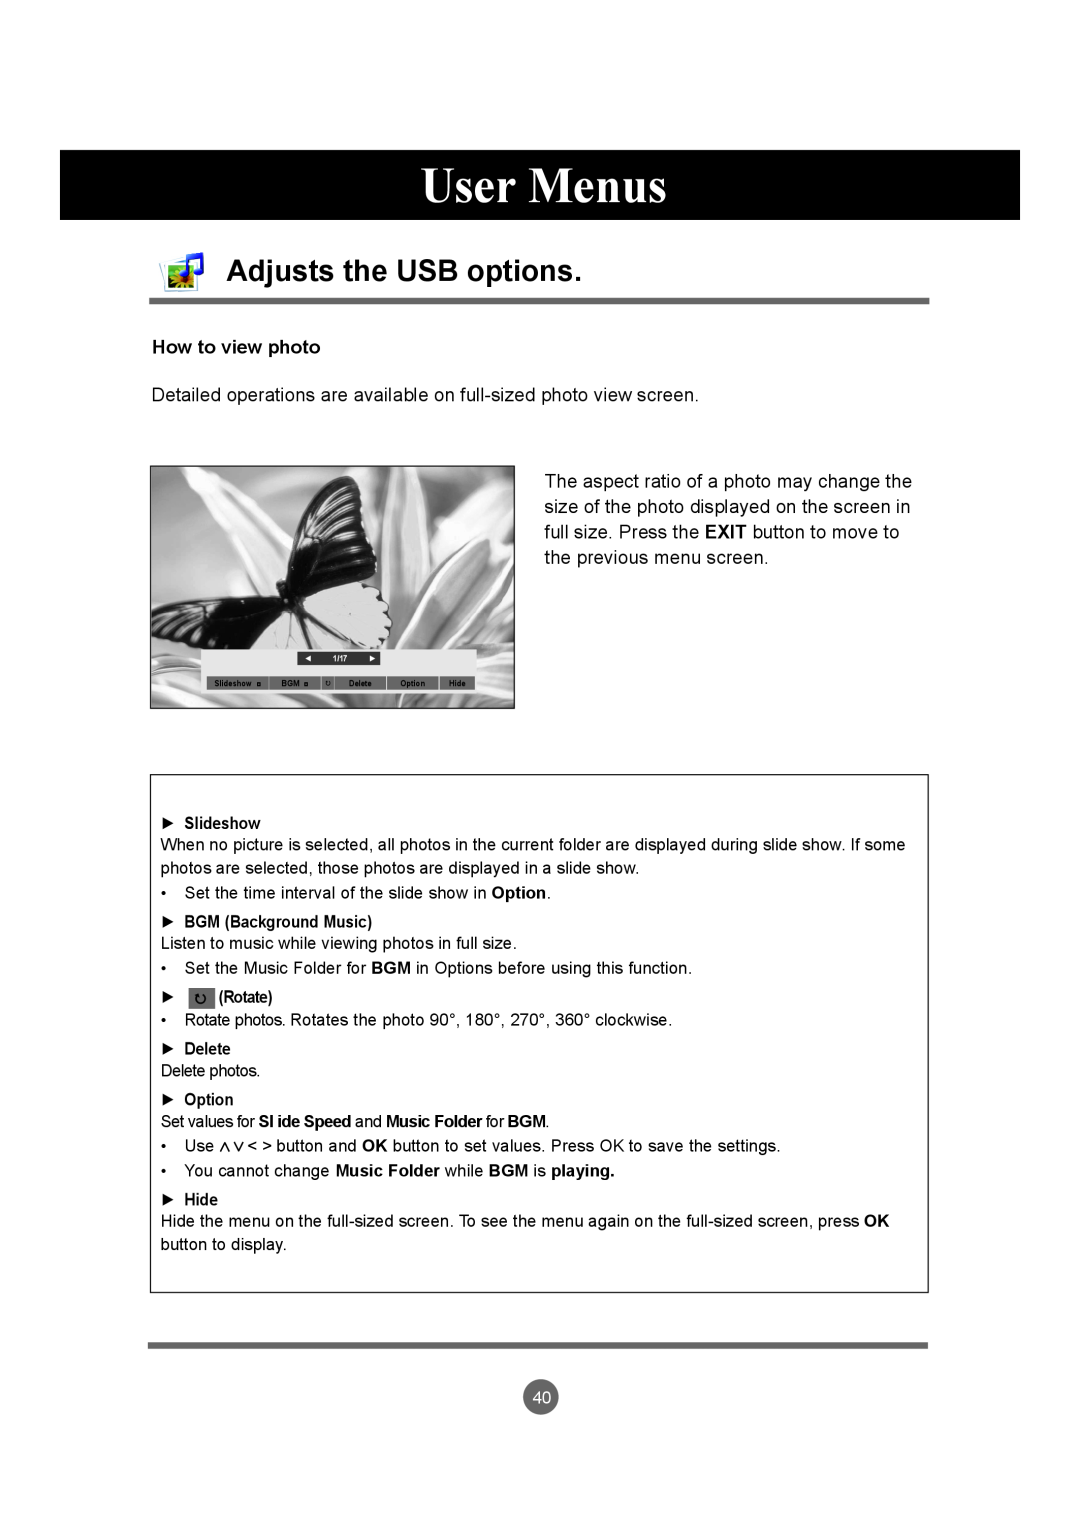 LG Electronics M4720C User Menus, Adjusts the USB options, How to view photo, Slideshow, BGM Background Music, Rotate 